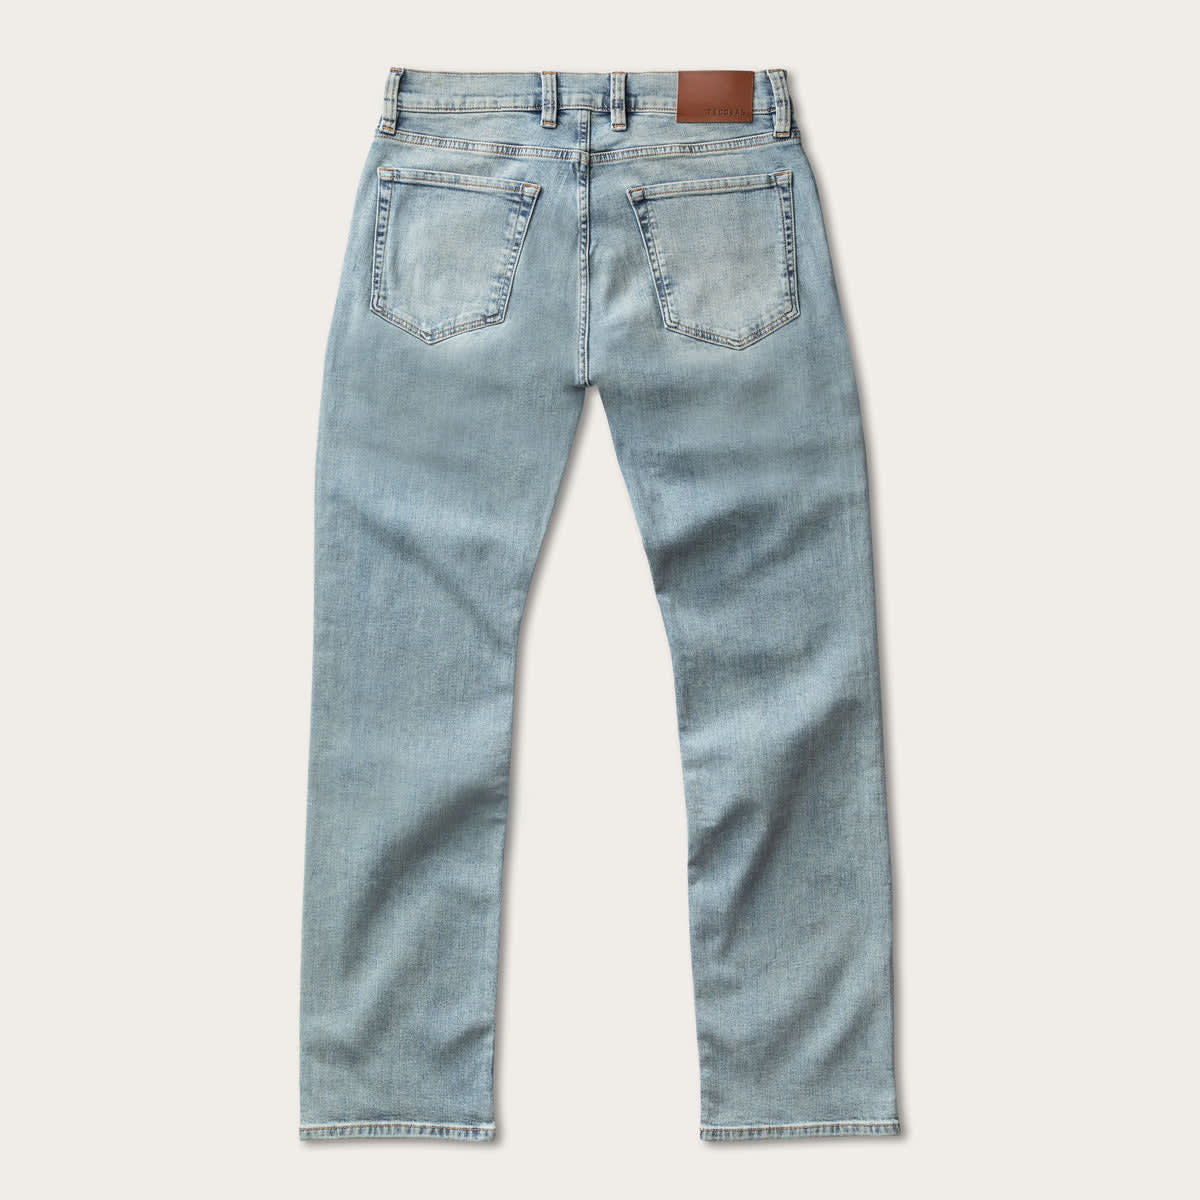 Rational Dexterity Detector Men's Slim Fit Jeans - Premium Bootcut Denim Jeans for Men